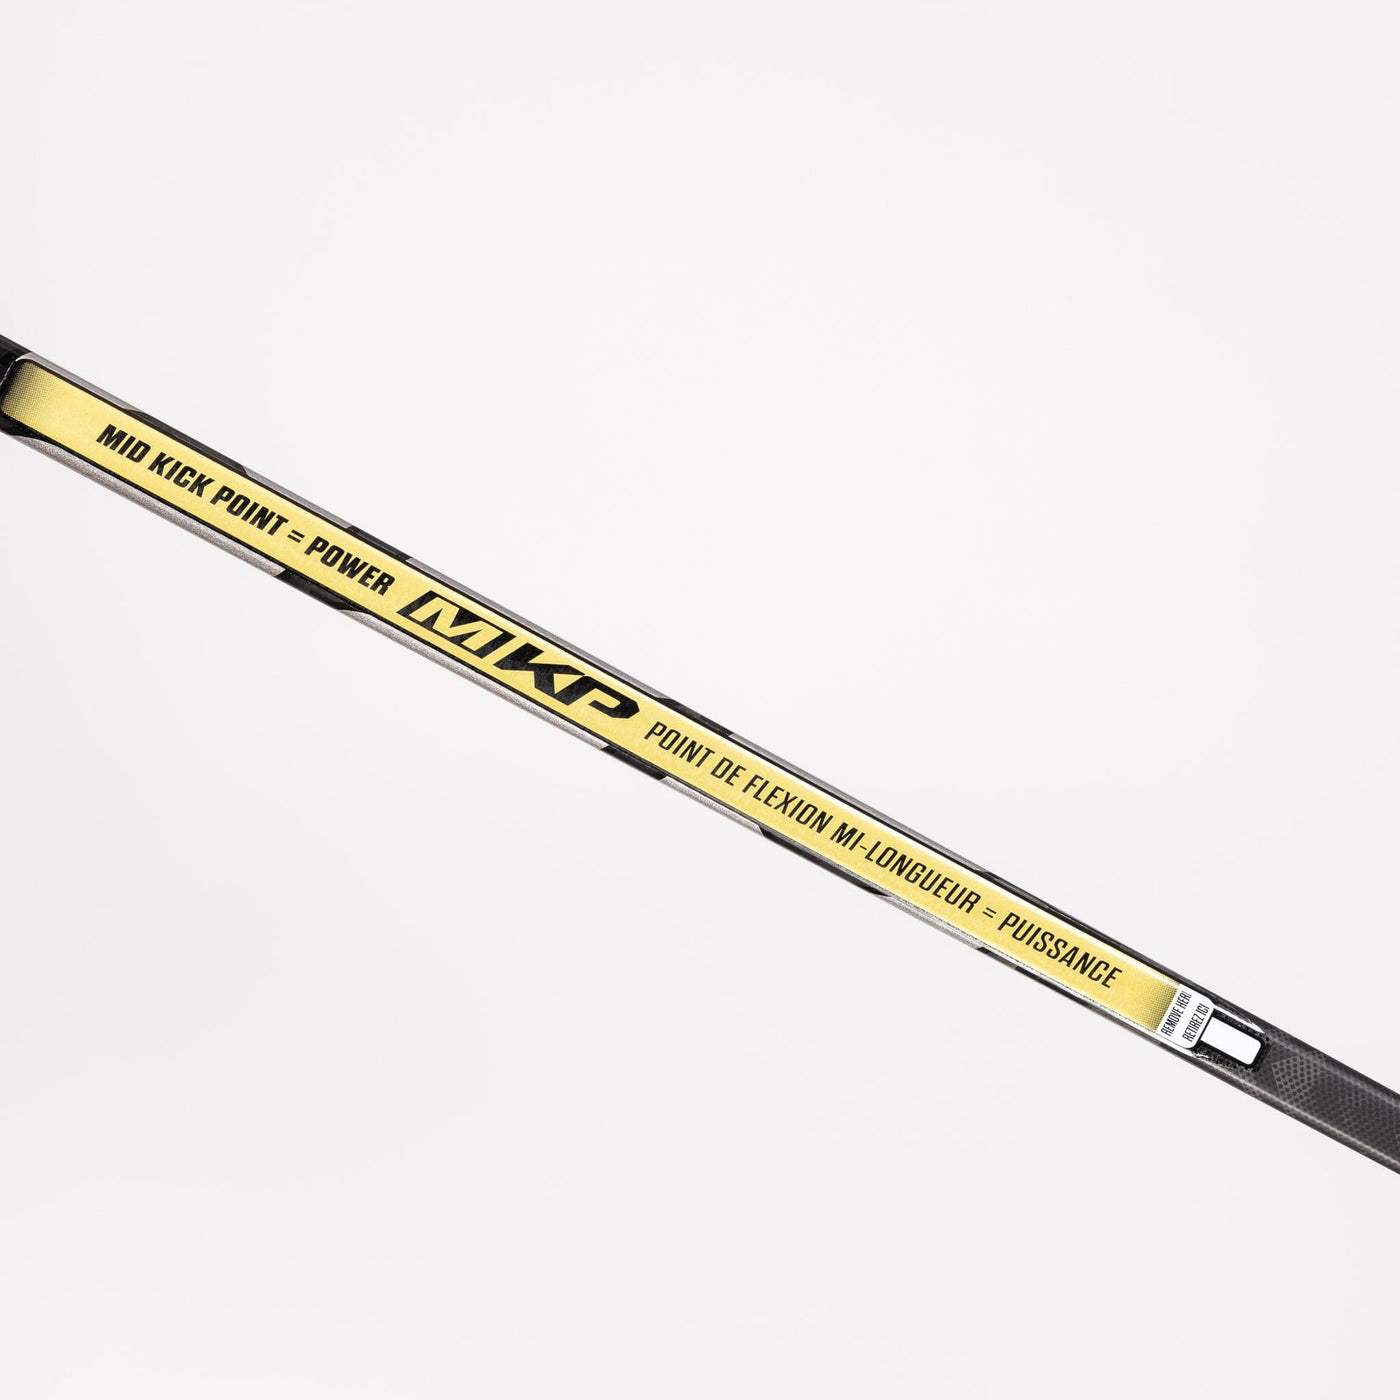 CCM Tacks AS6 Senior Hockey Stick - The Hockey Shop Source For Sports